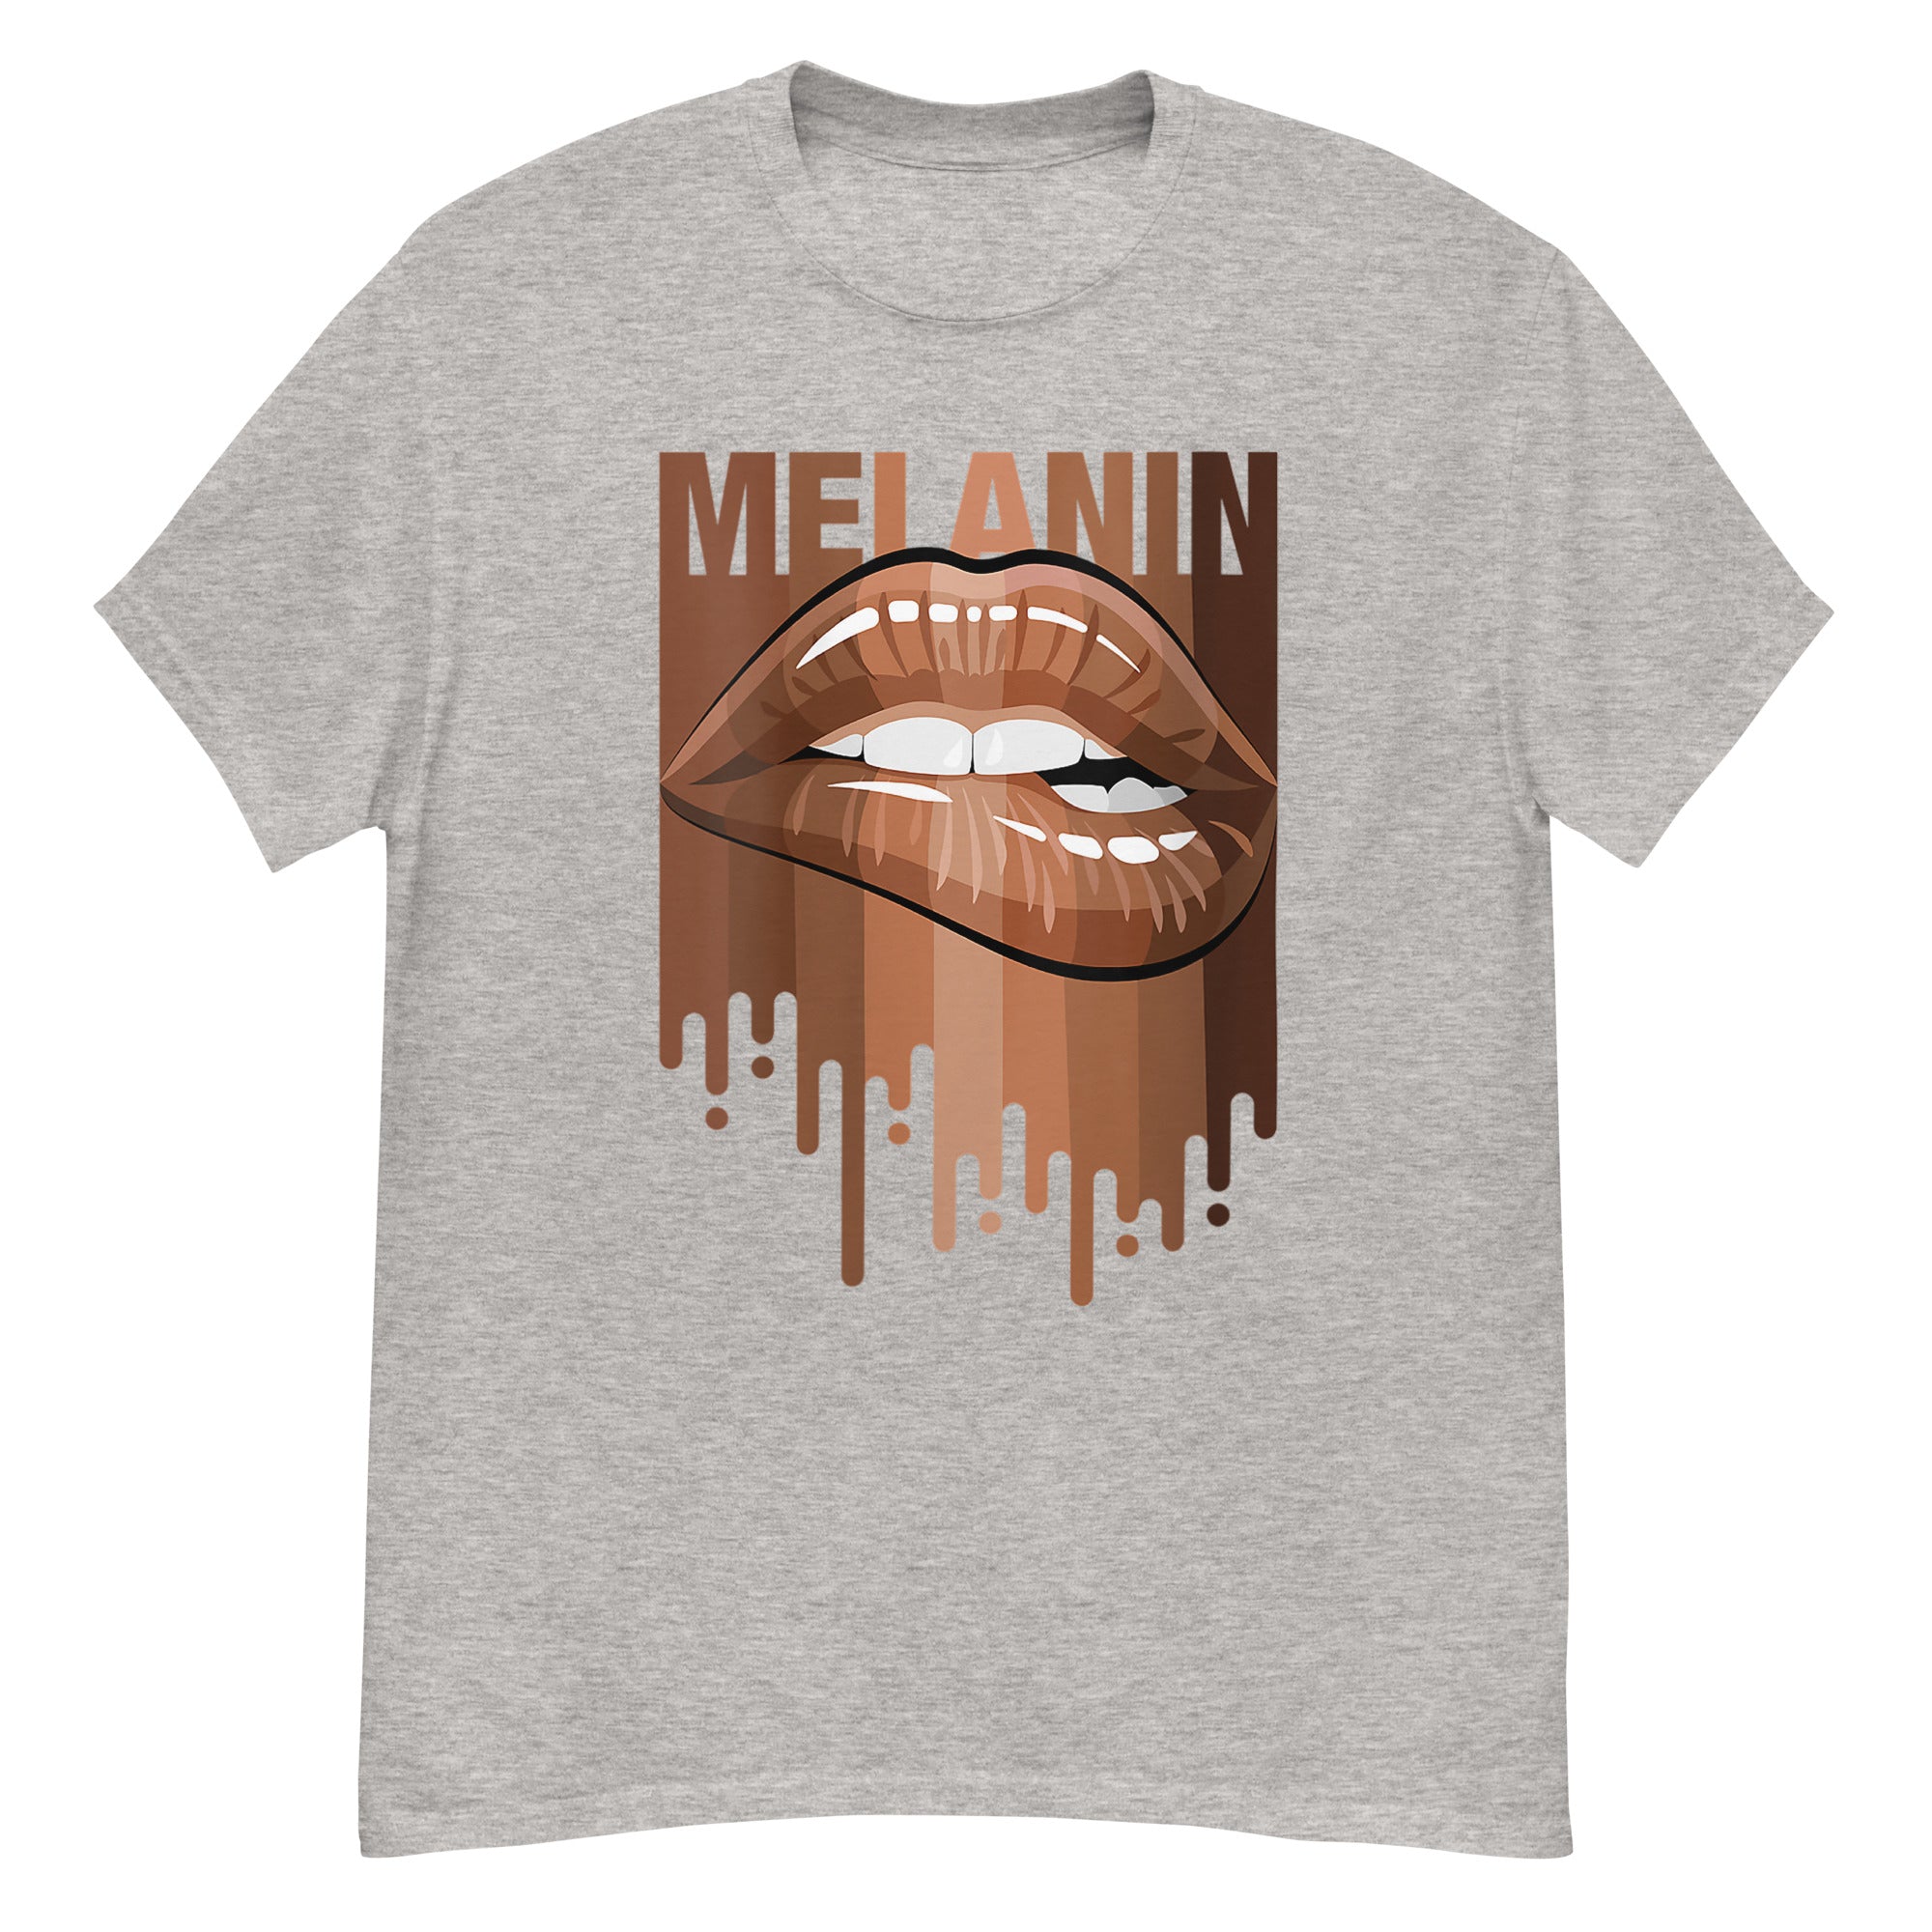 "MELANIN" Men's classic tee